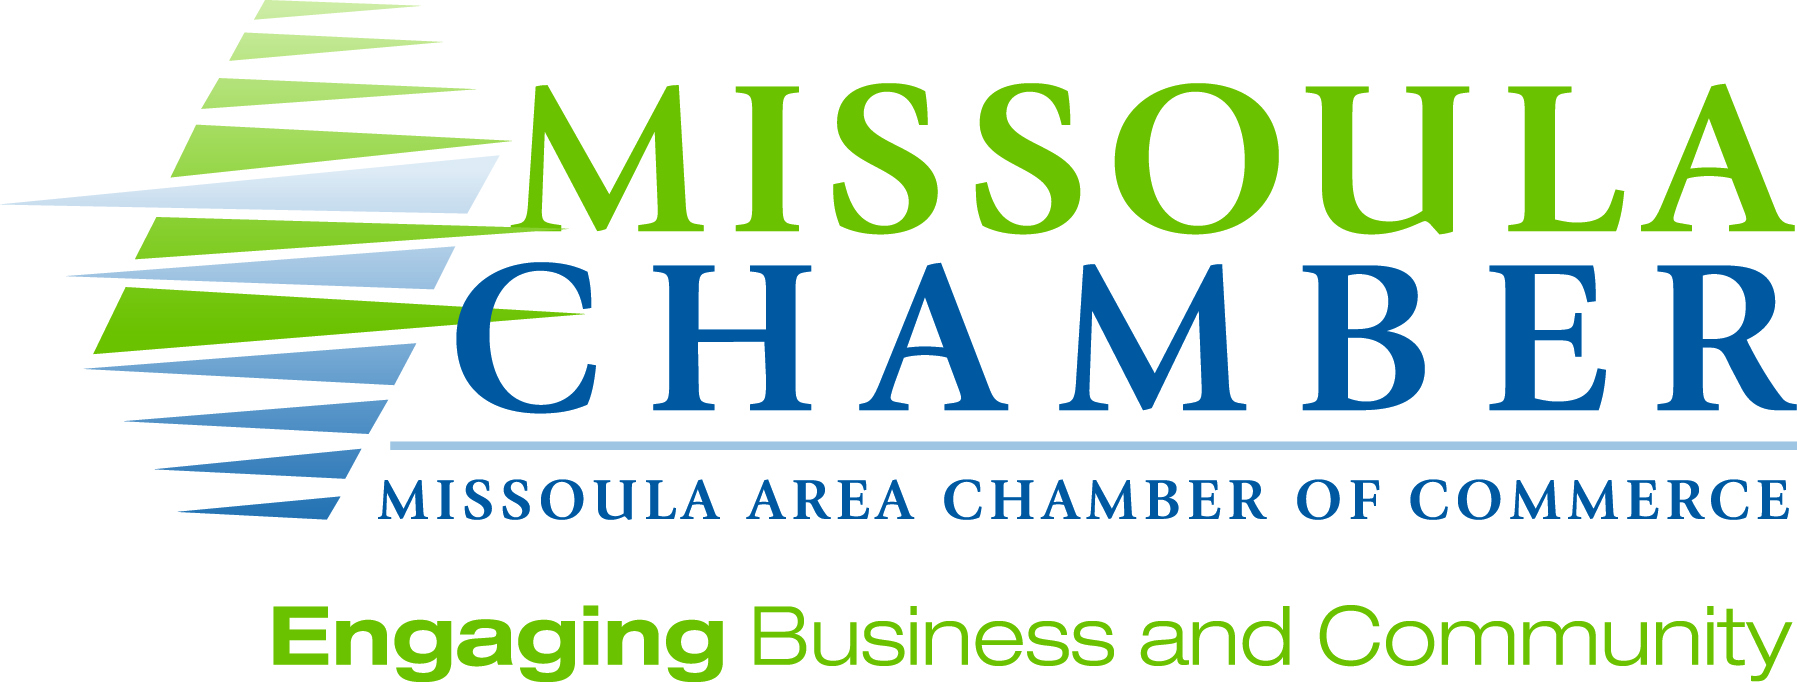 Missoula Chamber Missoula Area Chamber of Commerce Engaging Business and Community